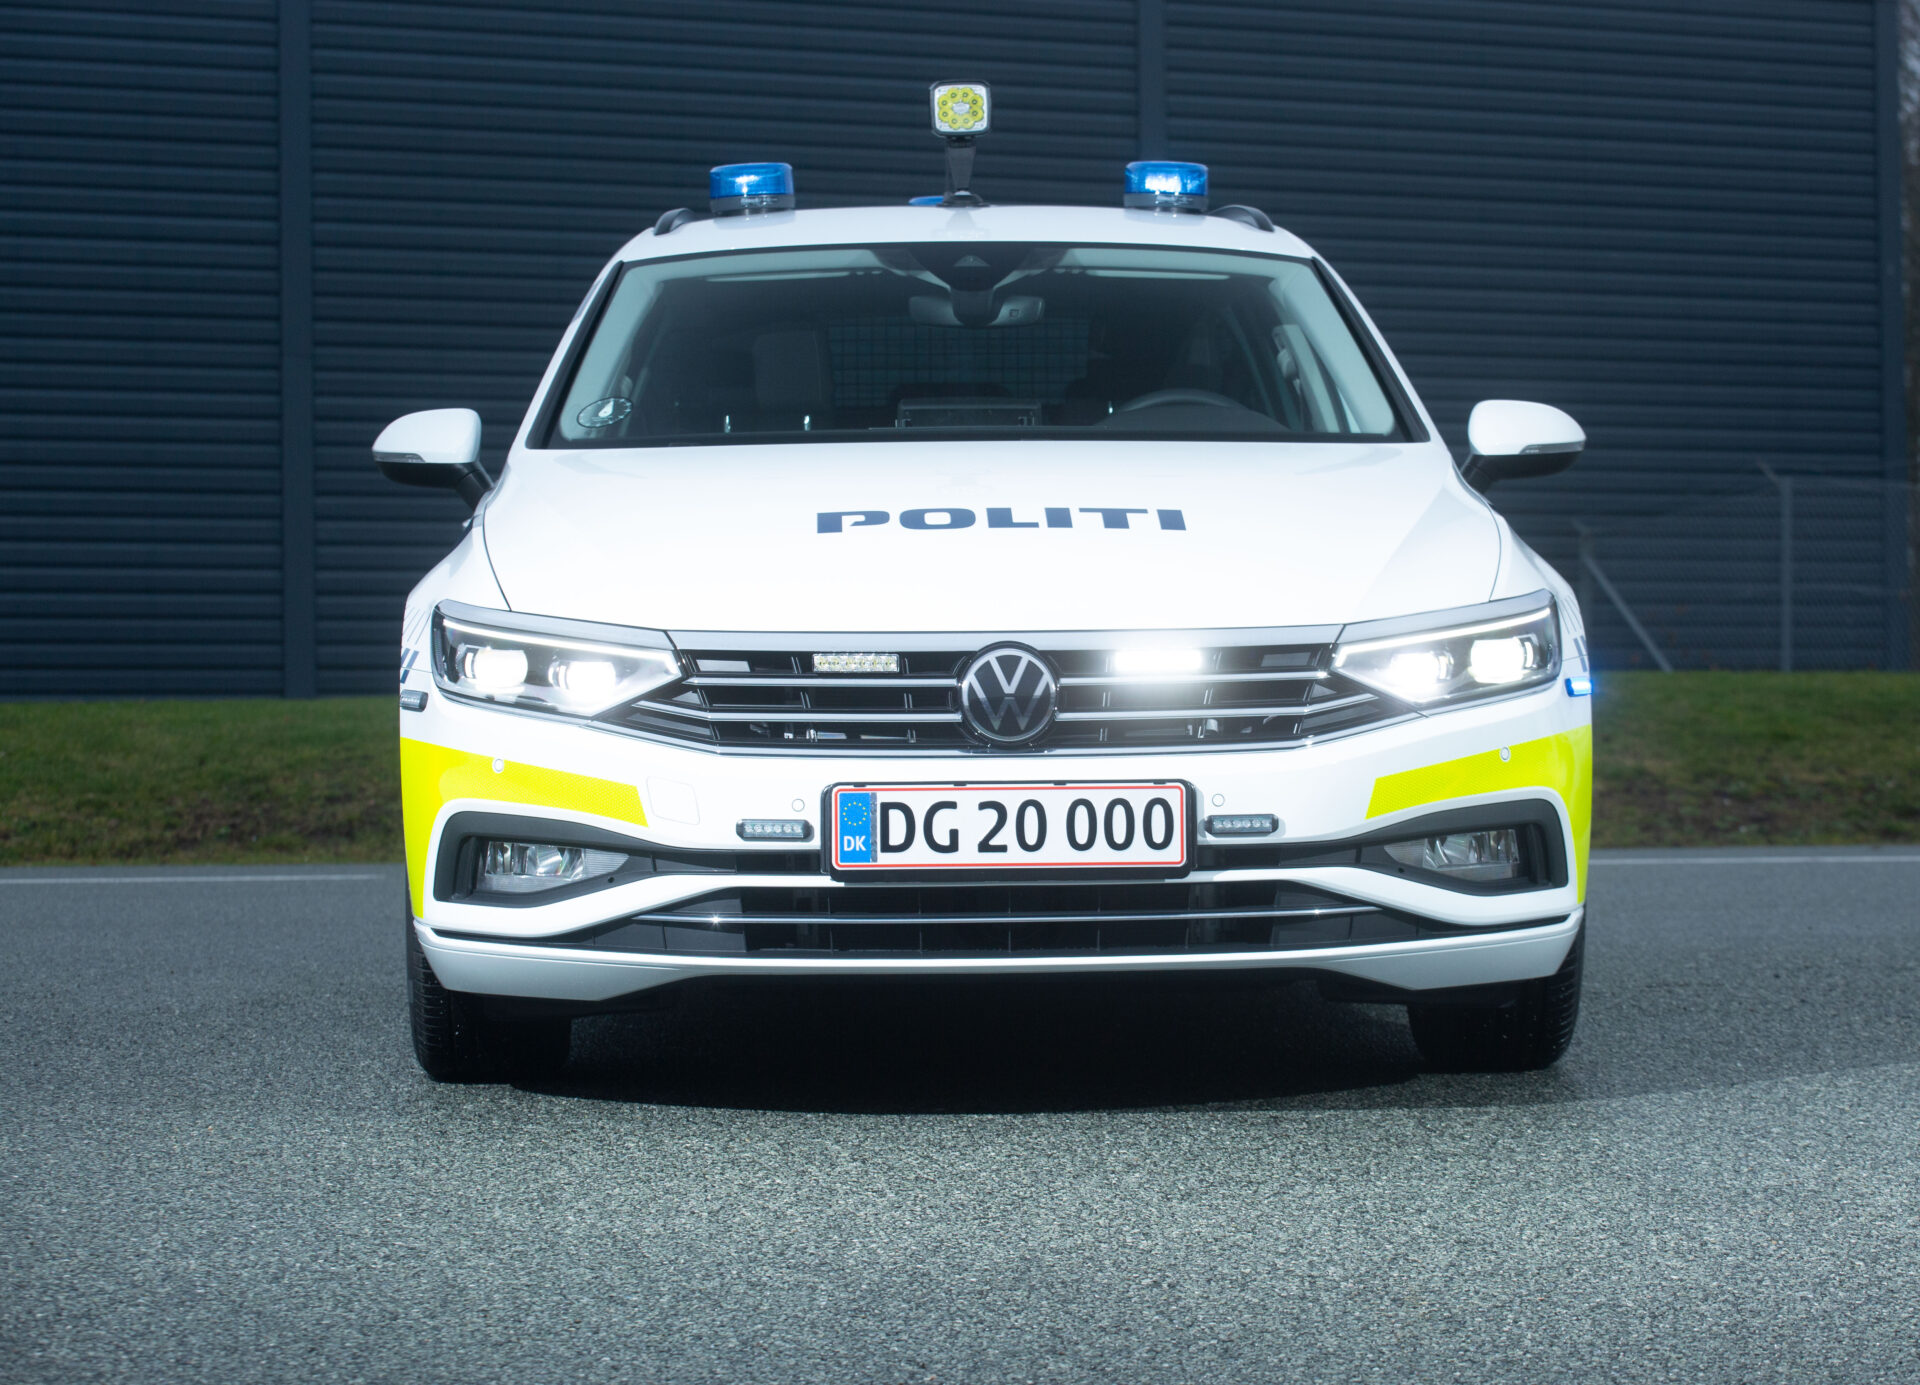 VW Passat Politi